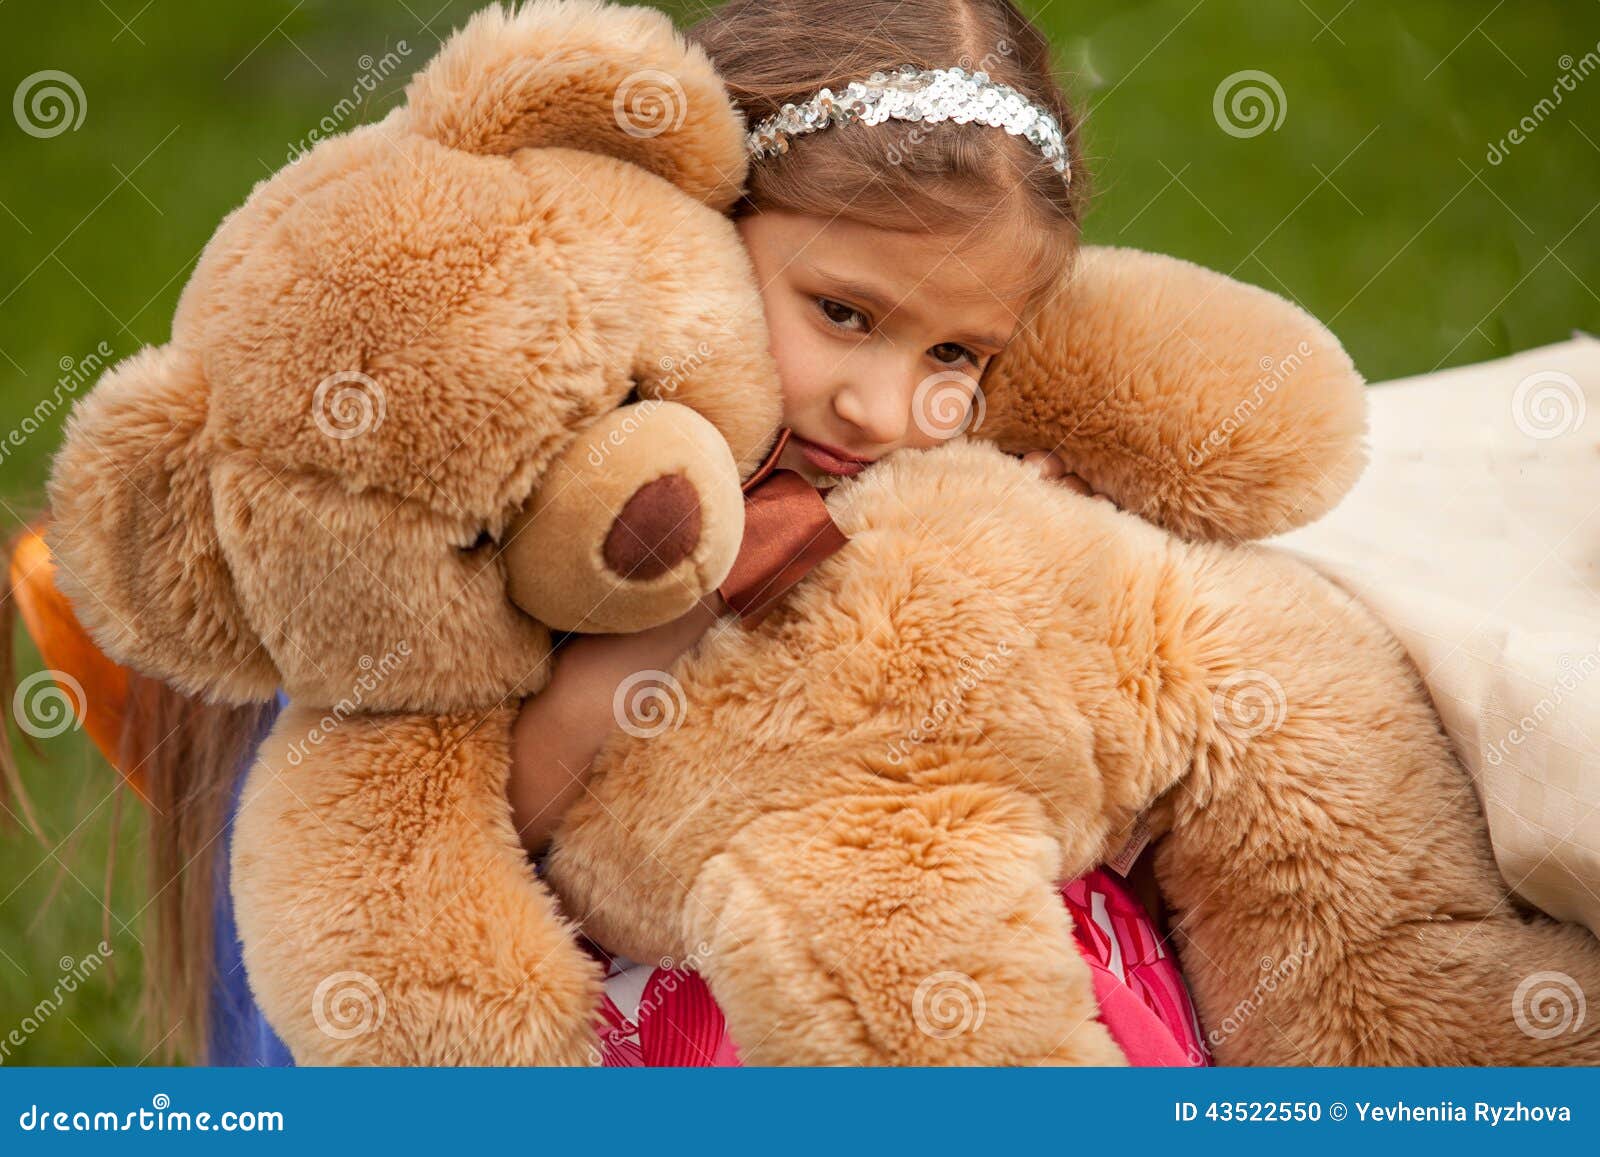 Photo of Sad Little Girl Hugging Teddy Bear Stock Photo - Image of ...